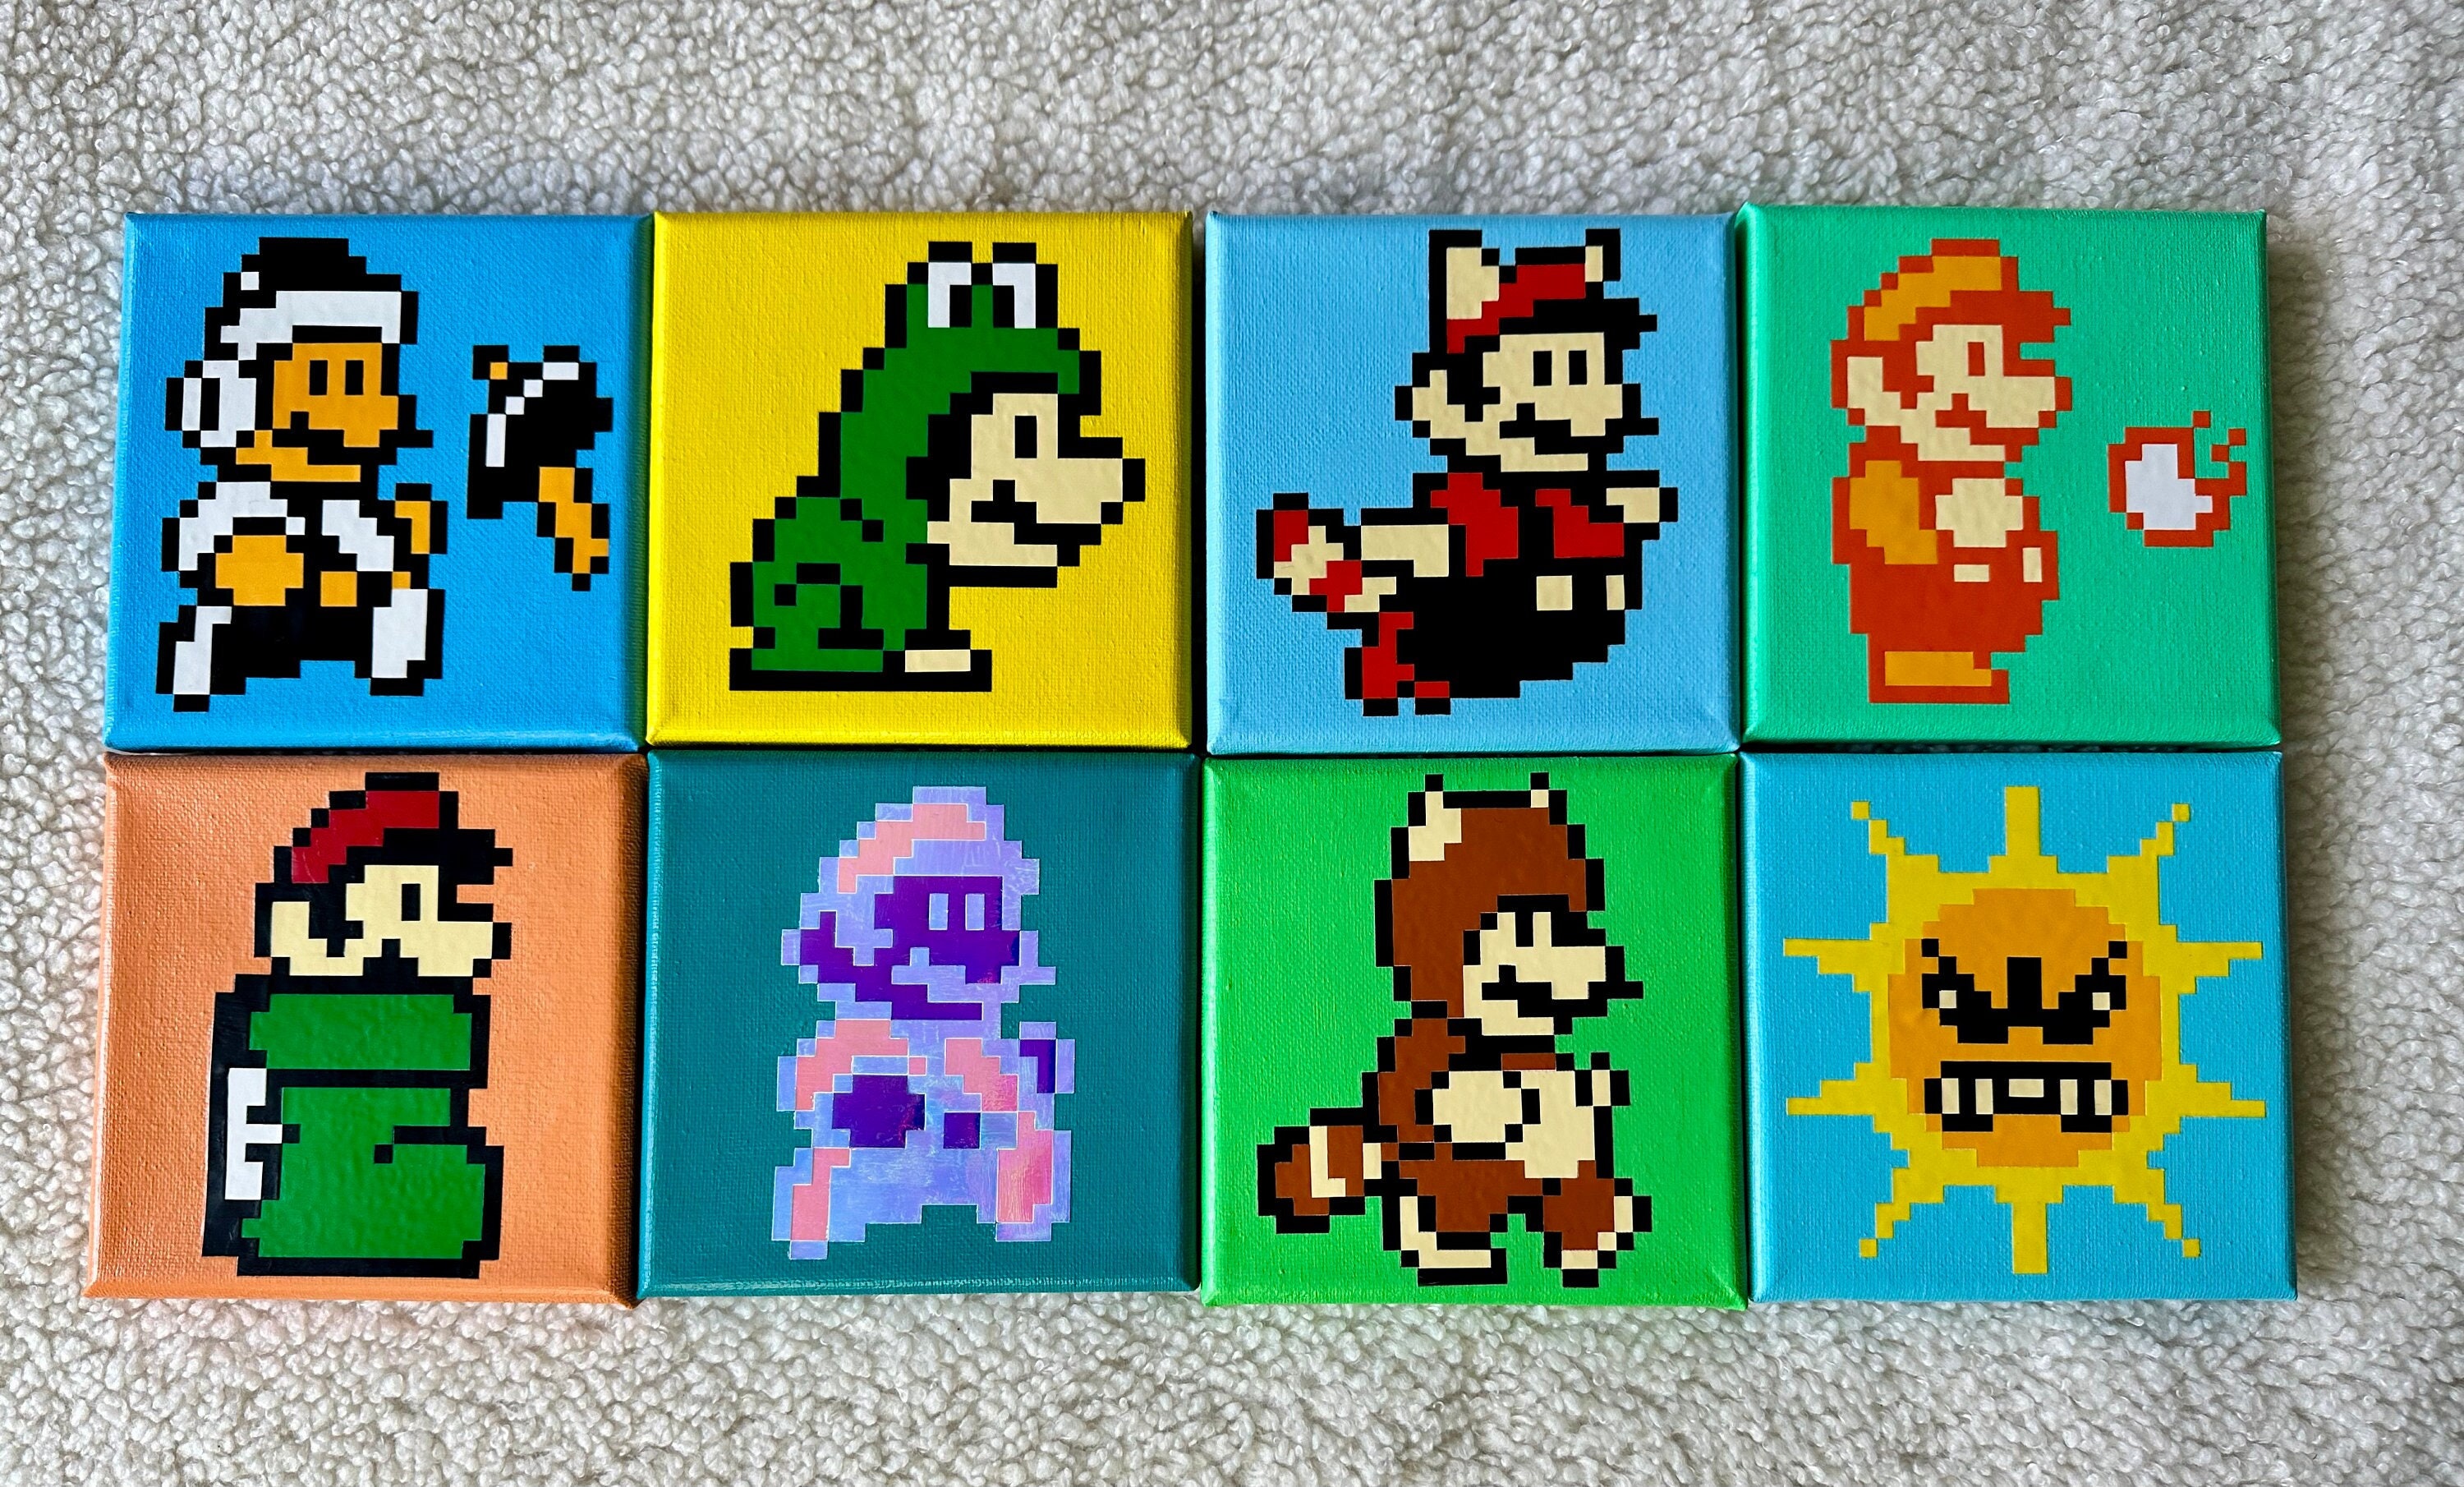 Super Mario Bros 3, Clipart, Mario, Pixels, 8-bit, Vector, Classic, Game,  Art, Digital, Stamp, Scrapbook, Instant Download, Clip Art, 121 